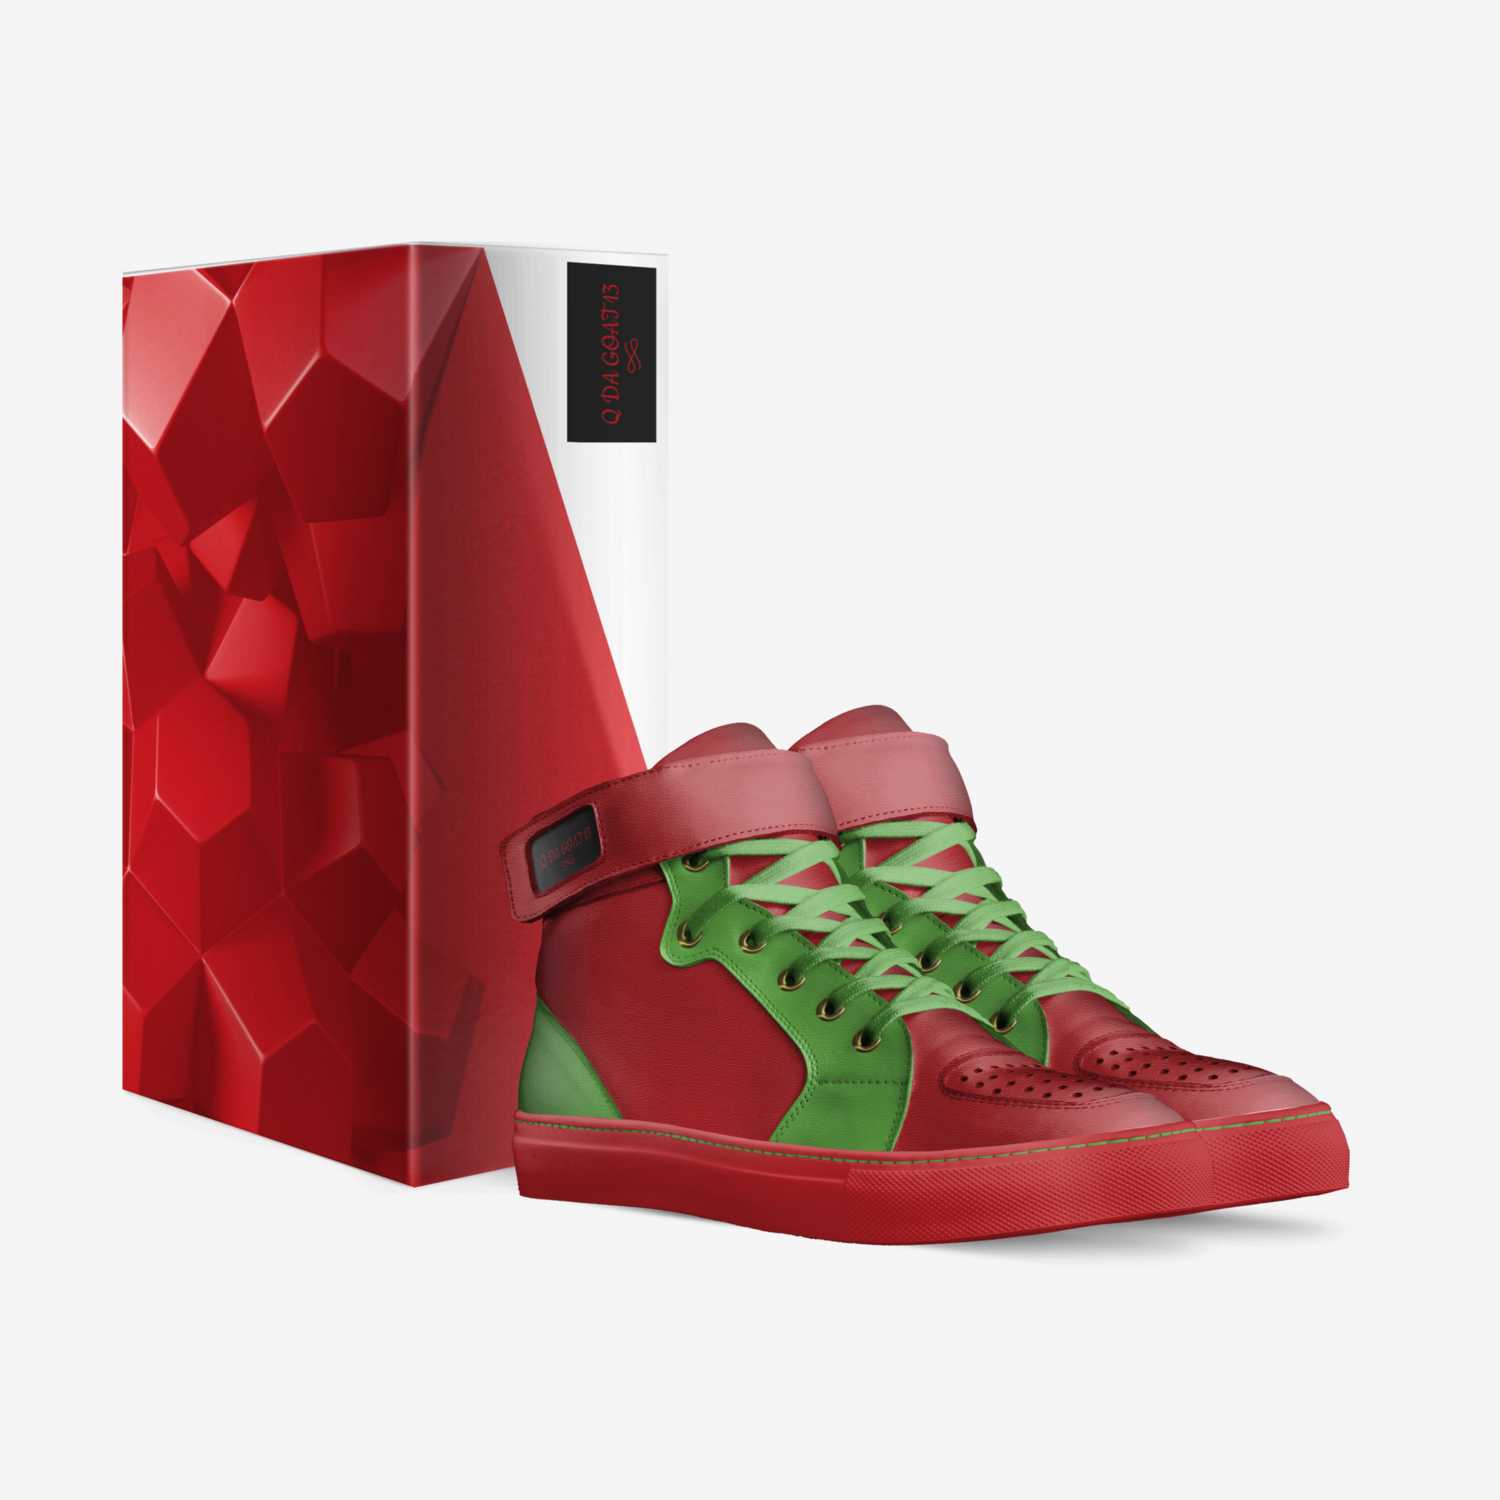 Q DA GOAT 13 custom made in Italy shoes by Maliq Williams | Box view